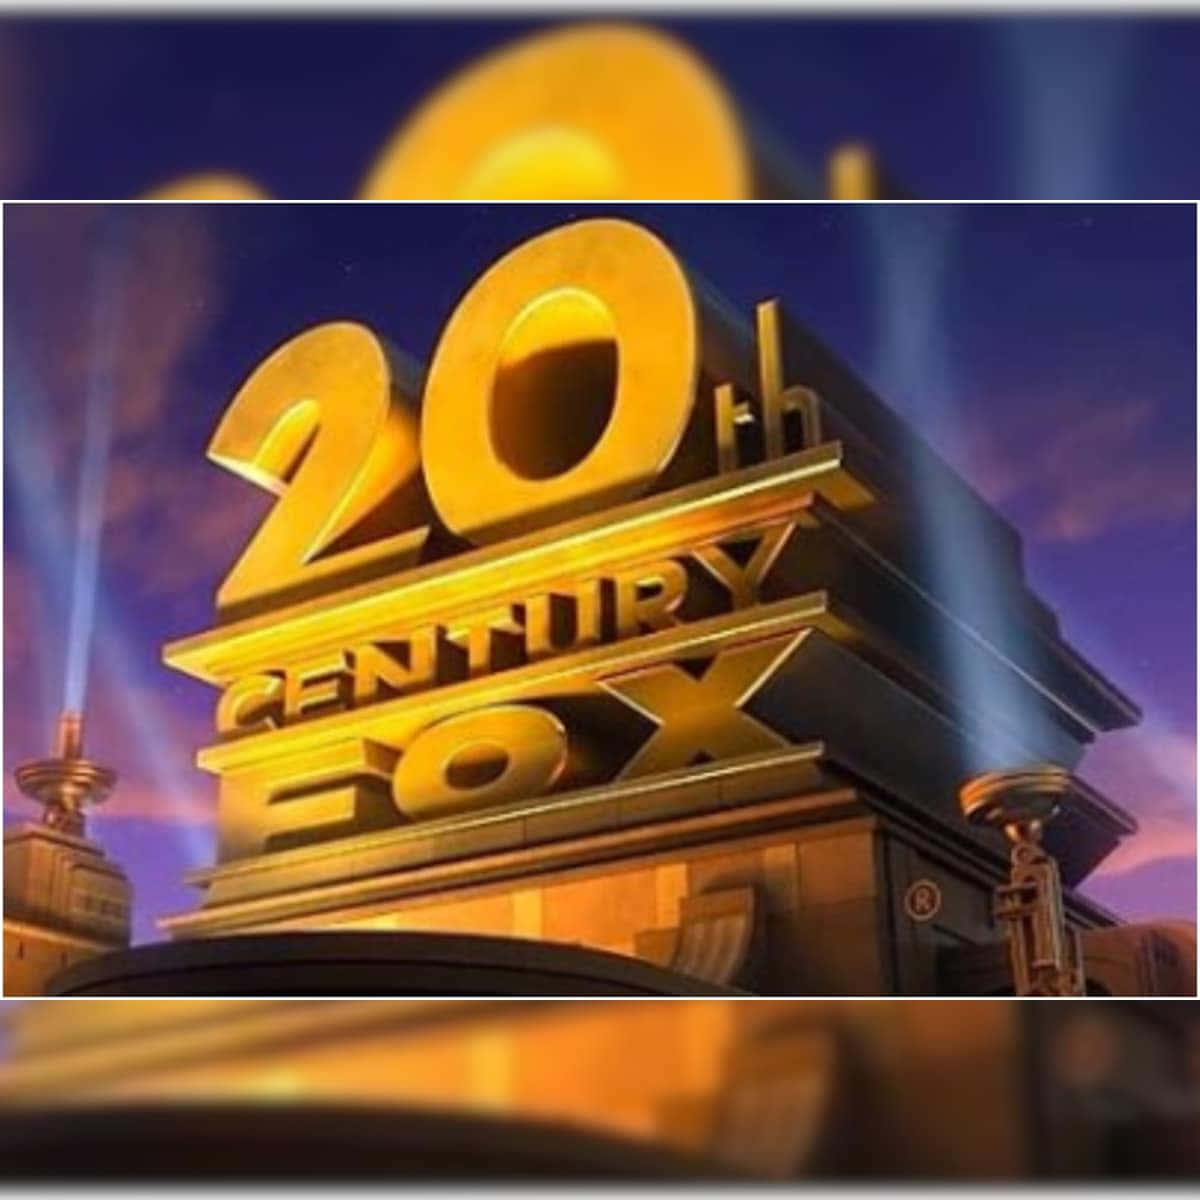 20th Century Fox Logo With Lights On It